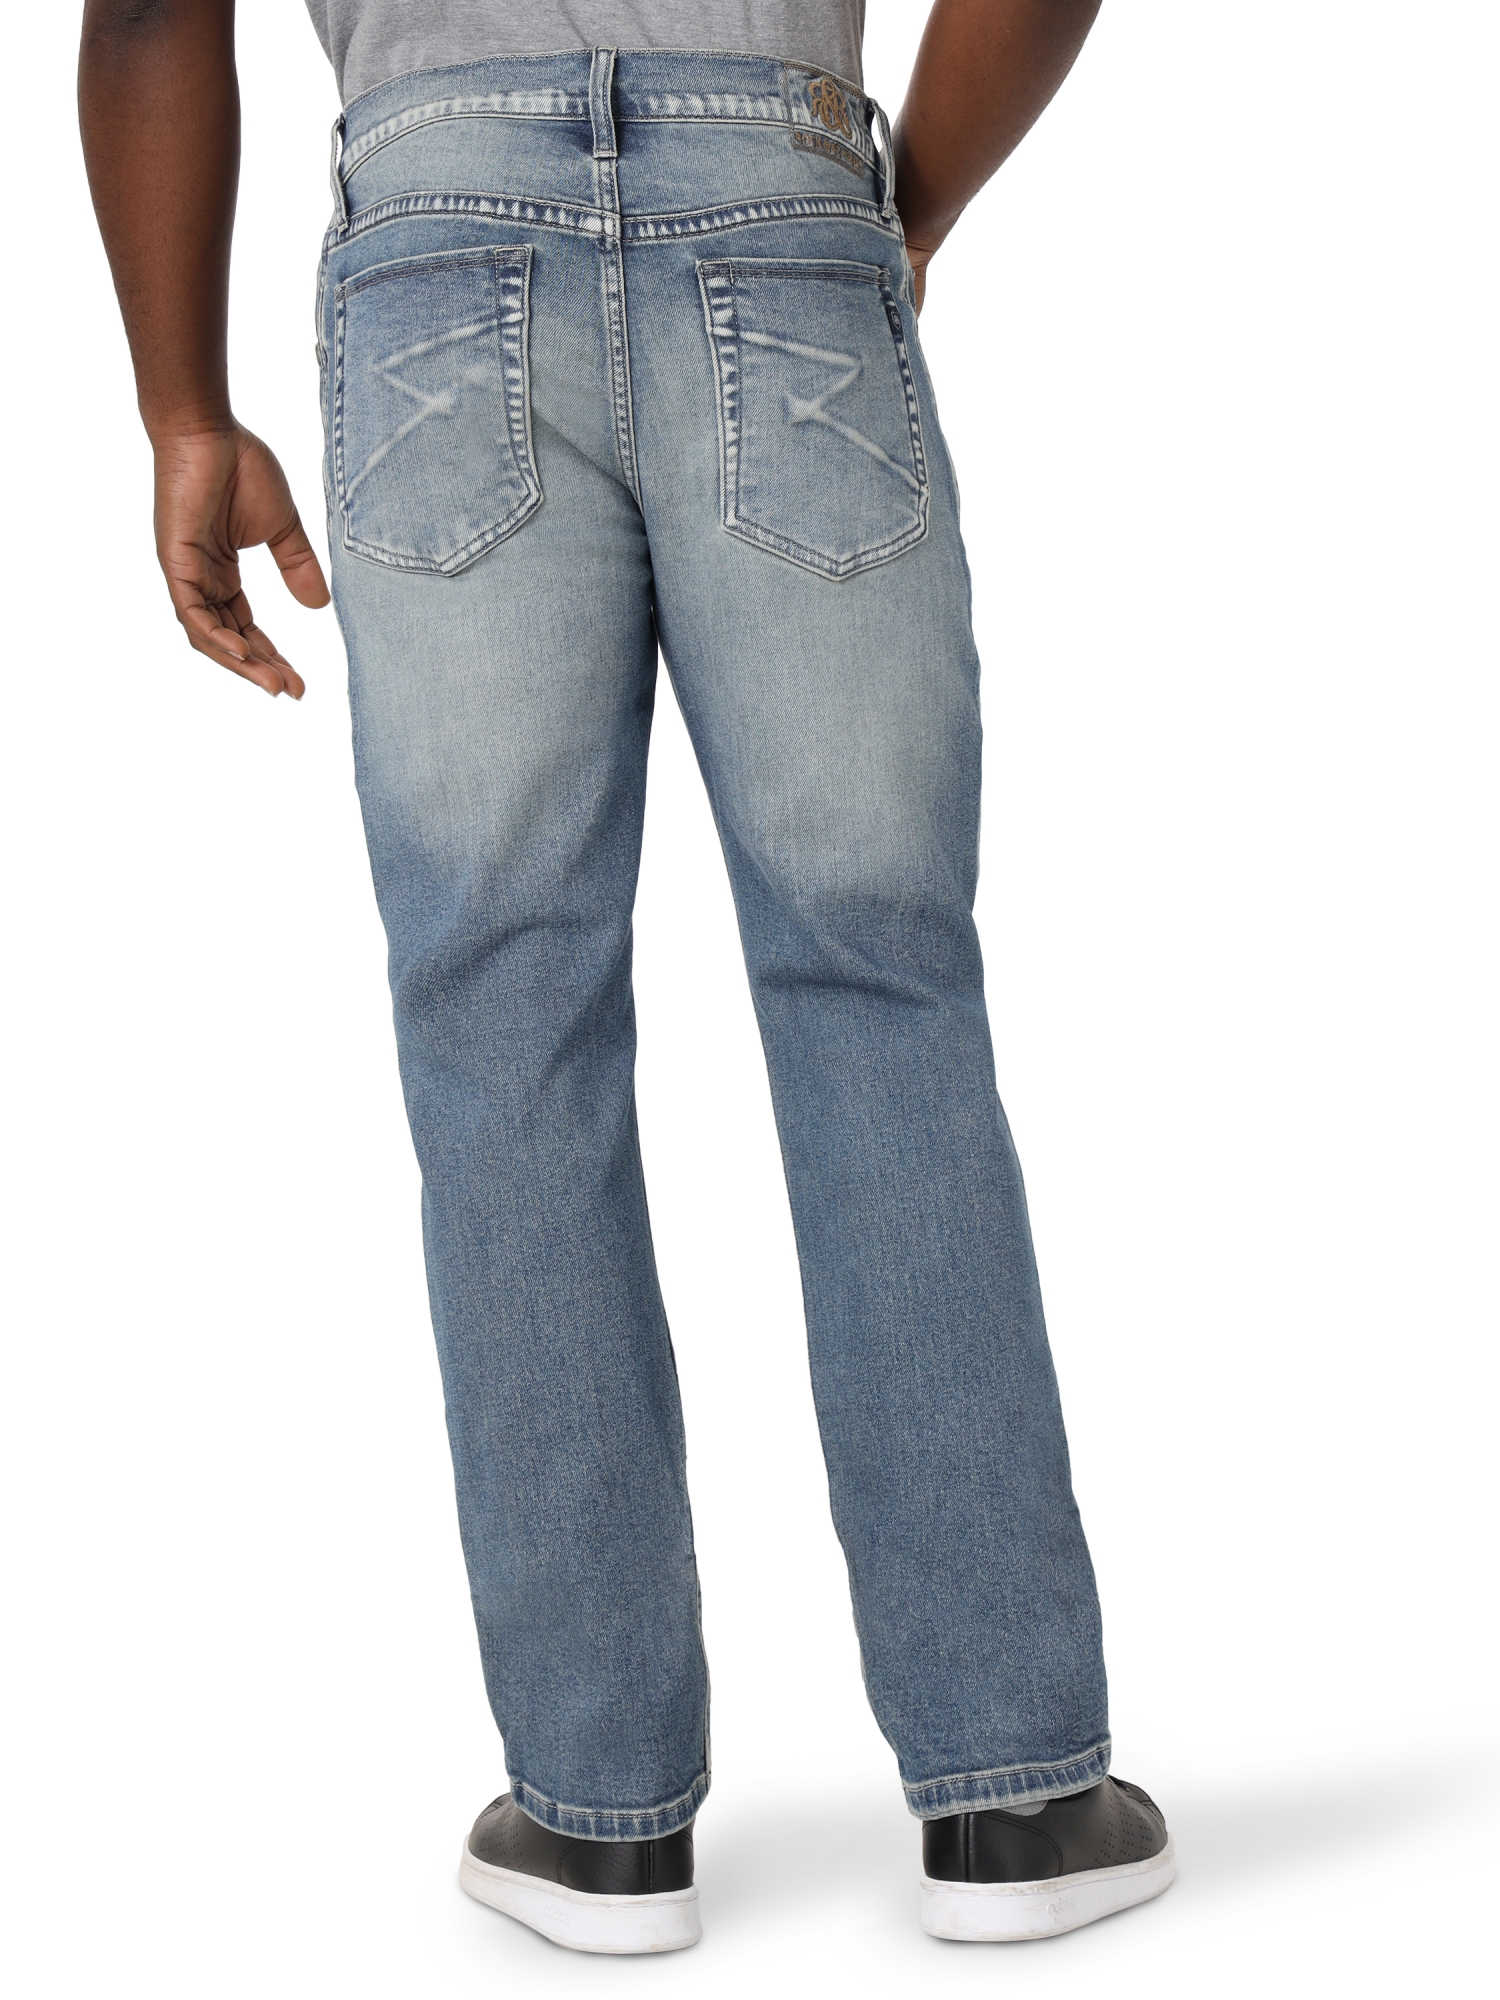 Rock & Republic Men's Straight Leg Jean with Ultra Comfort Denim - image 3 of 5